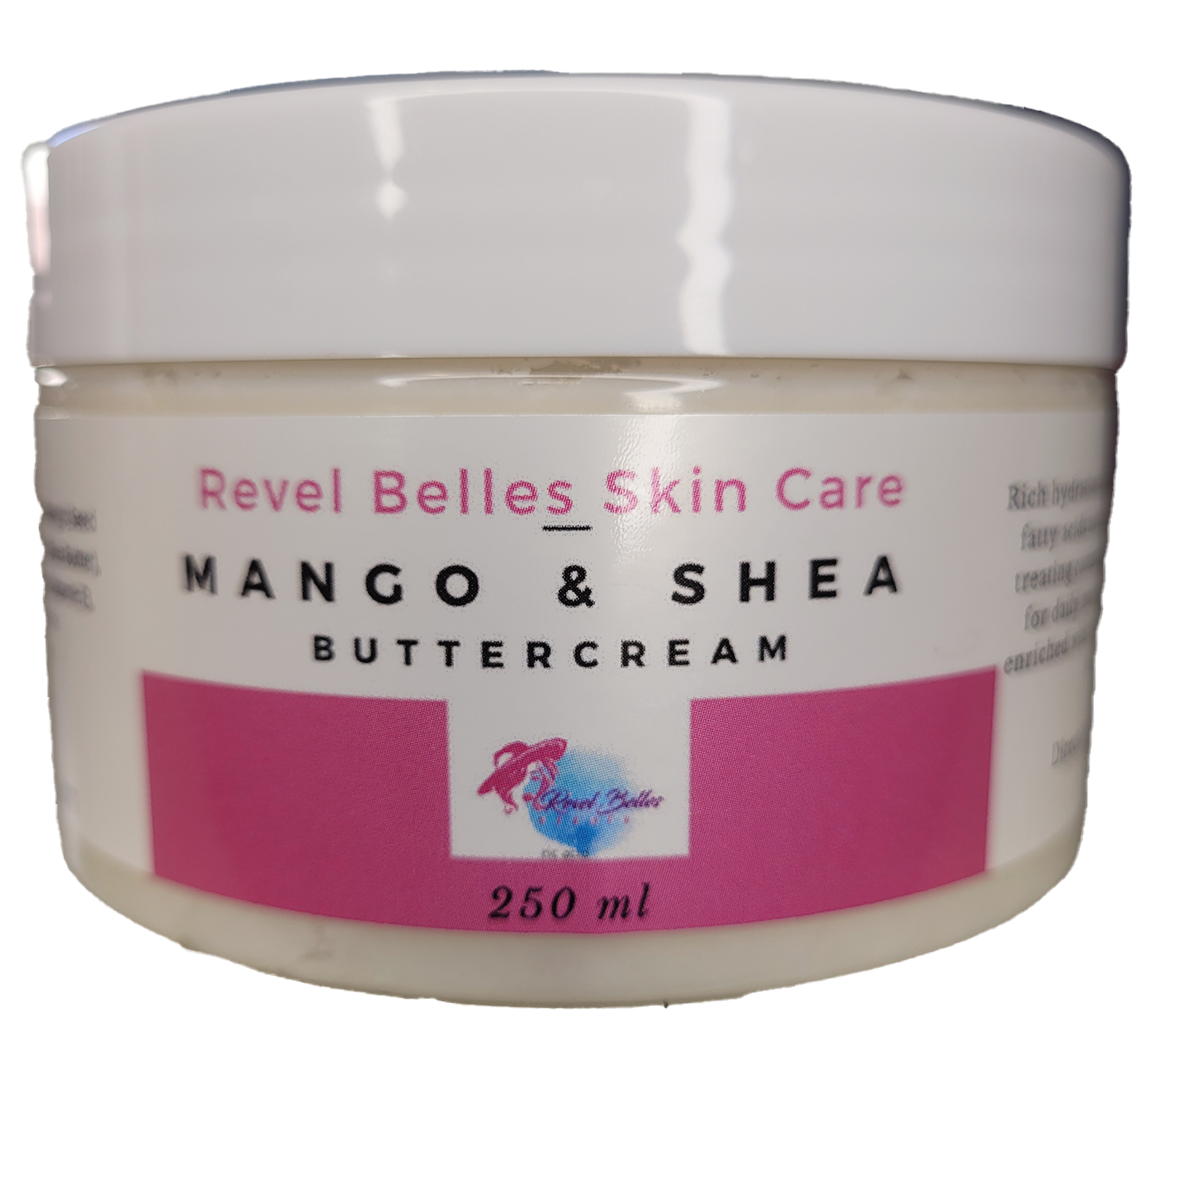 Mango & Shea Face & Body Buttercream, 8 oz